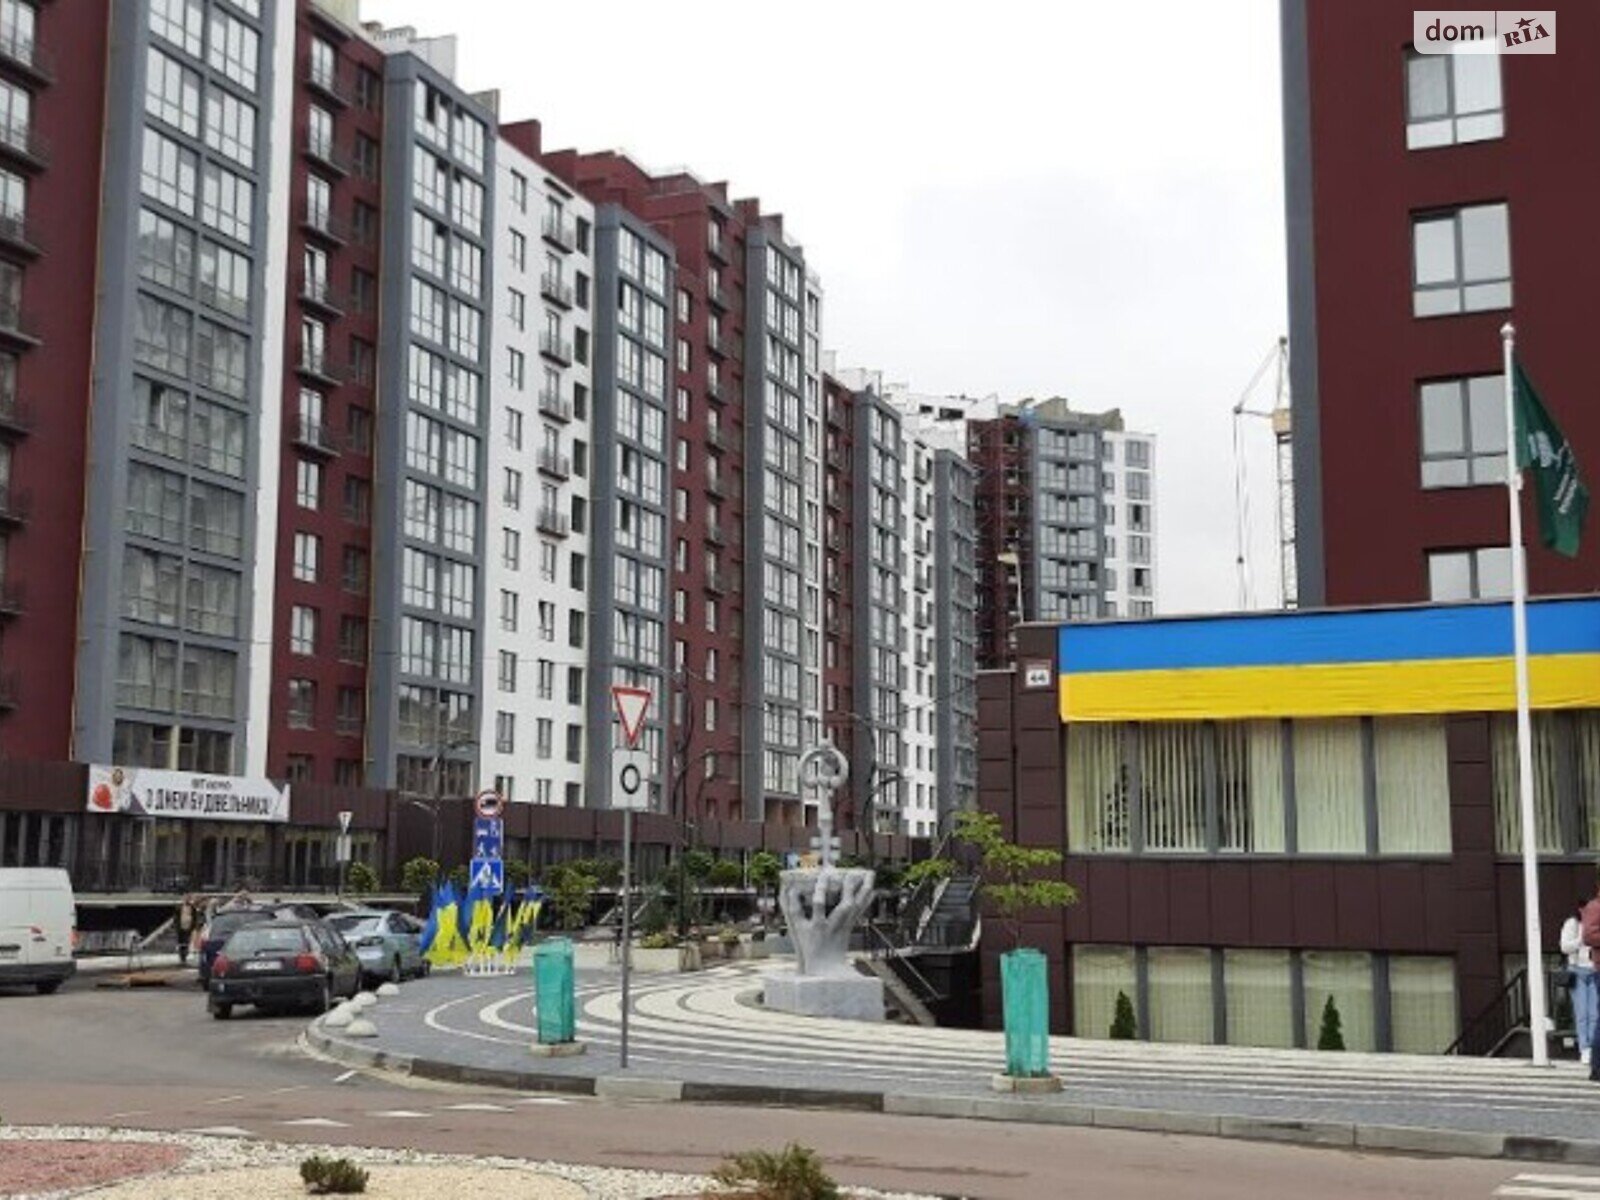 Продажа двухкомнатной квартиры в Ивано-Франковске, на ул. Княгинин, район Набережная Княгинин фото 1